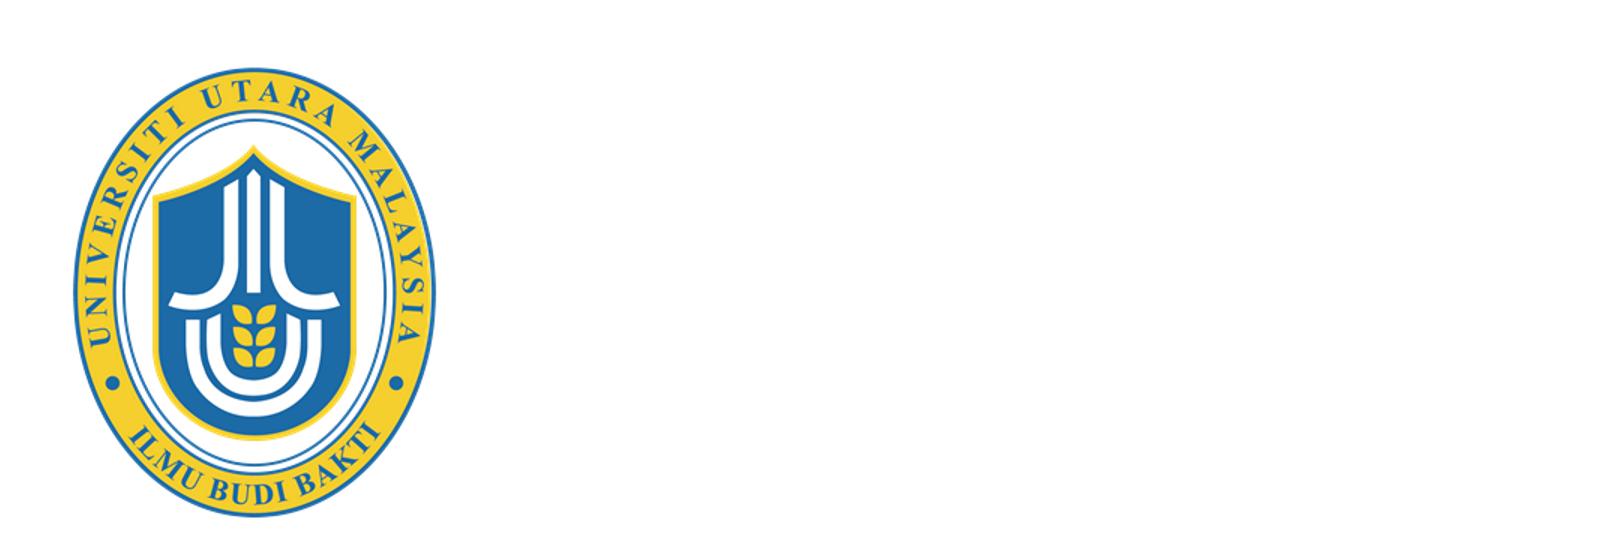 Pusat Pengajian Bahasa, Tamadun & Falsafah - UUM